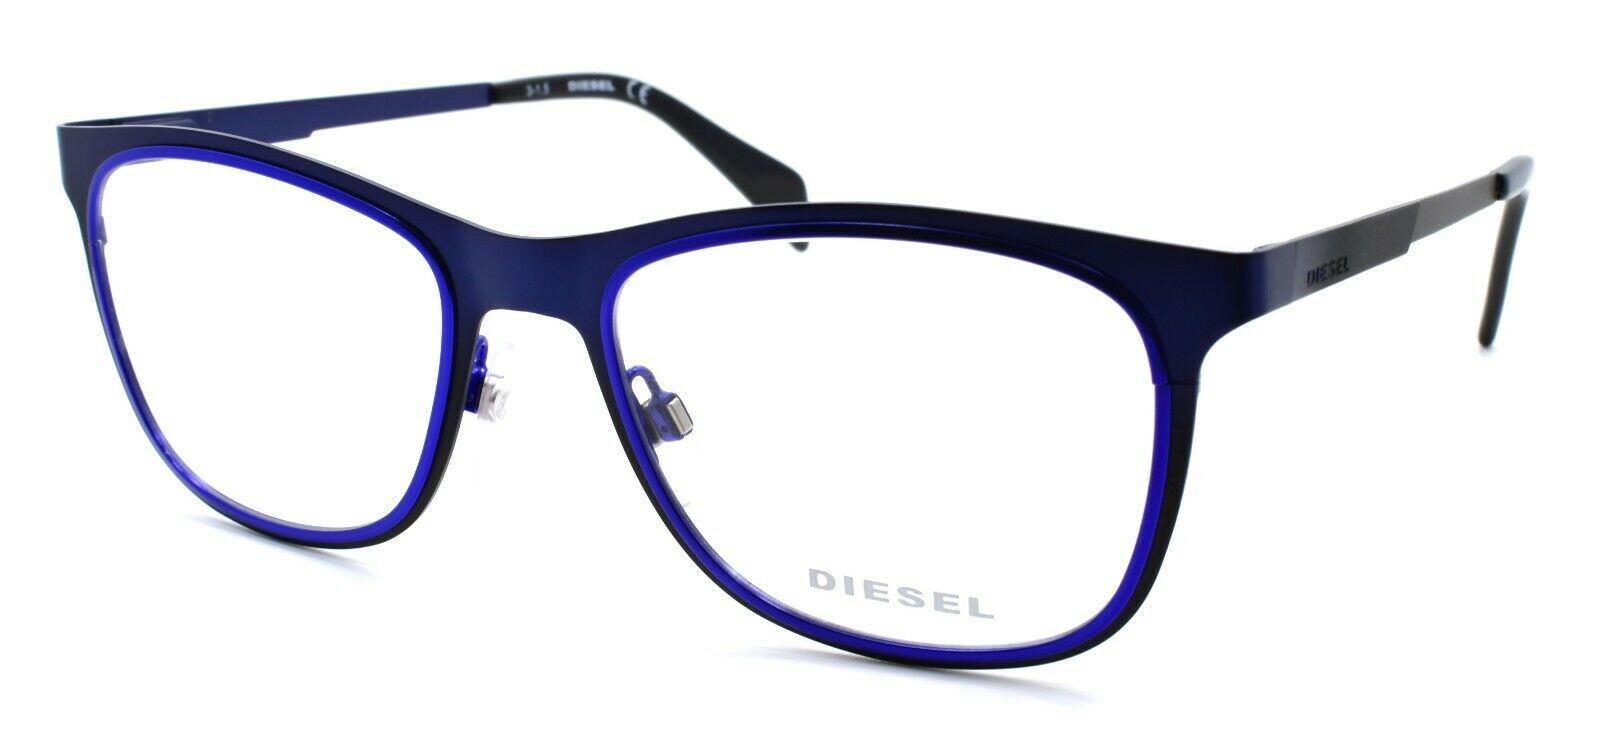 1-Diesel DL5139 092 Unisex Eyeglasses Frames 53-19-145 Blue Two Tone-664689669035-IKSpecs